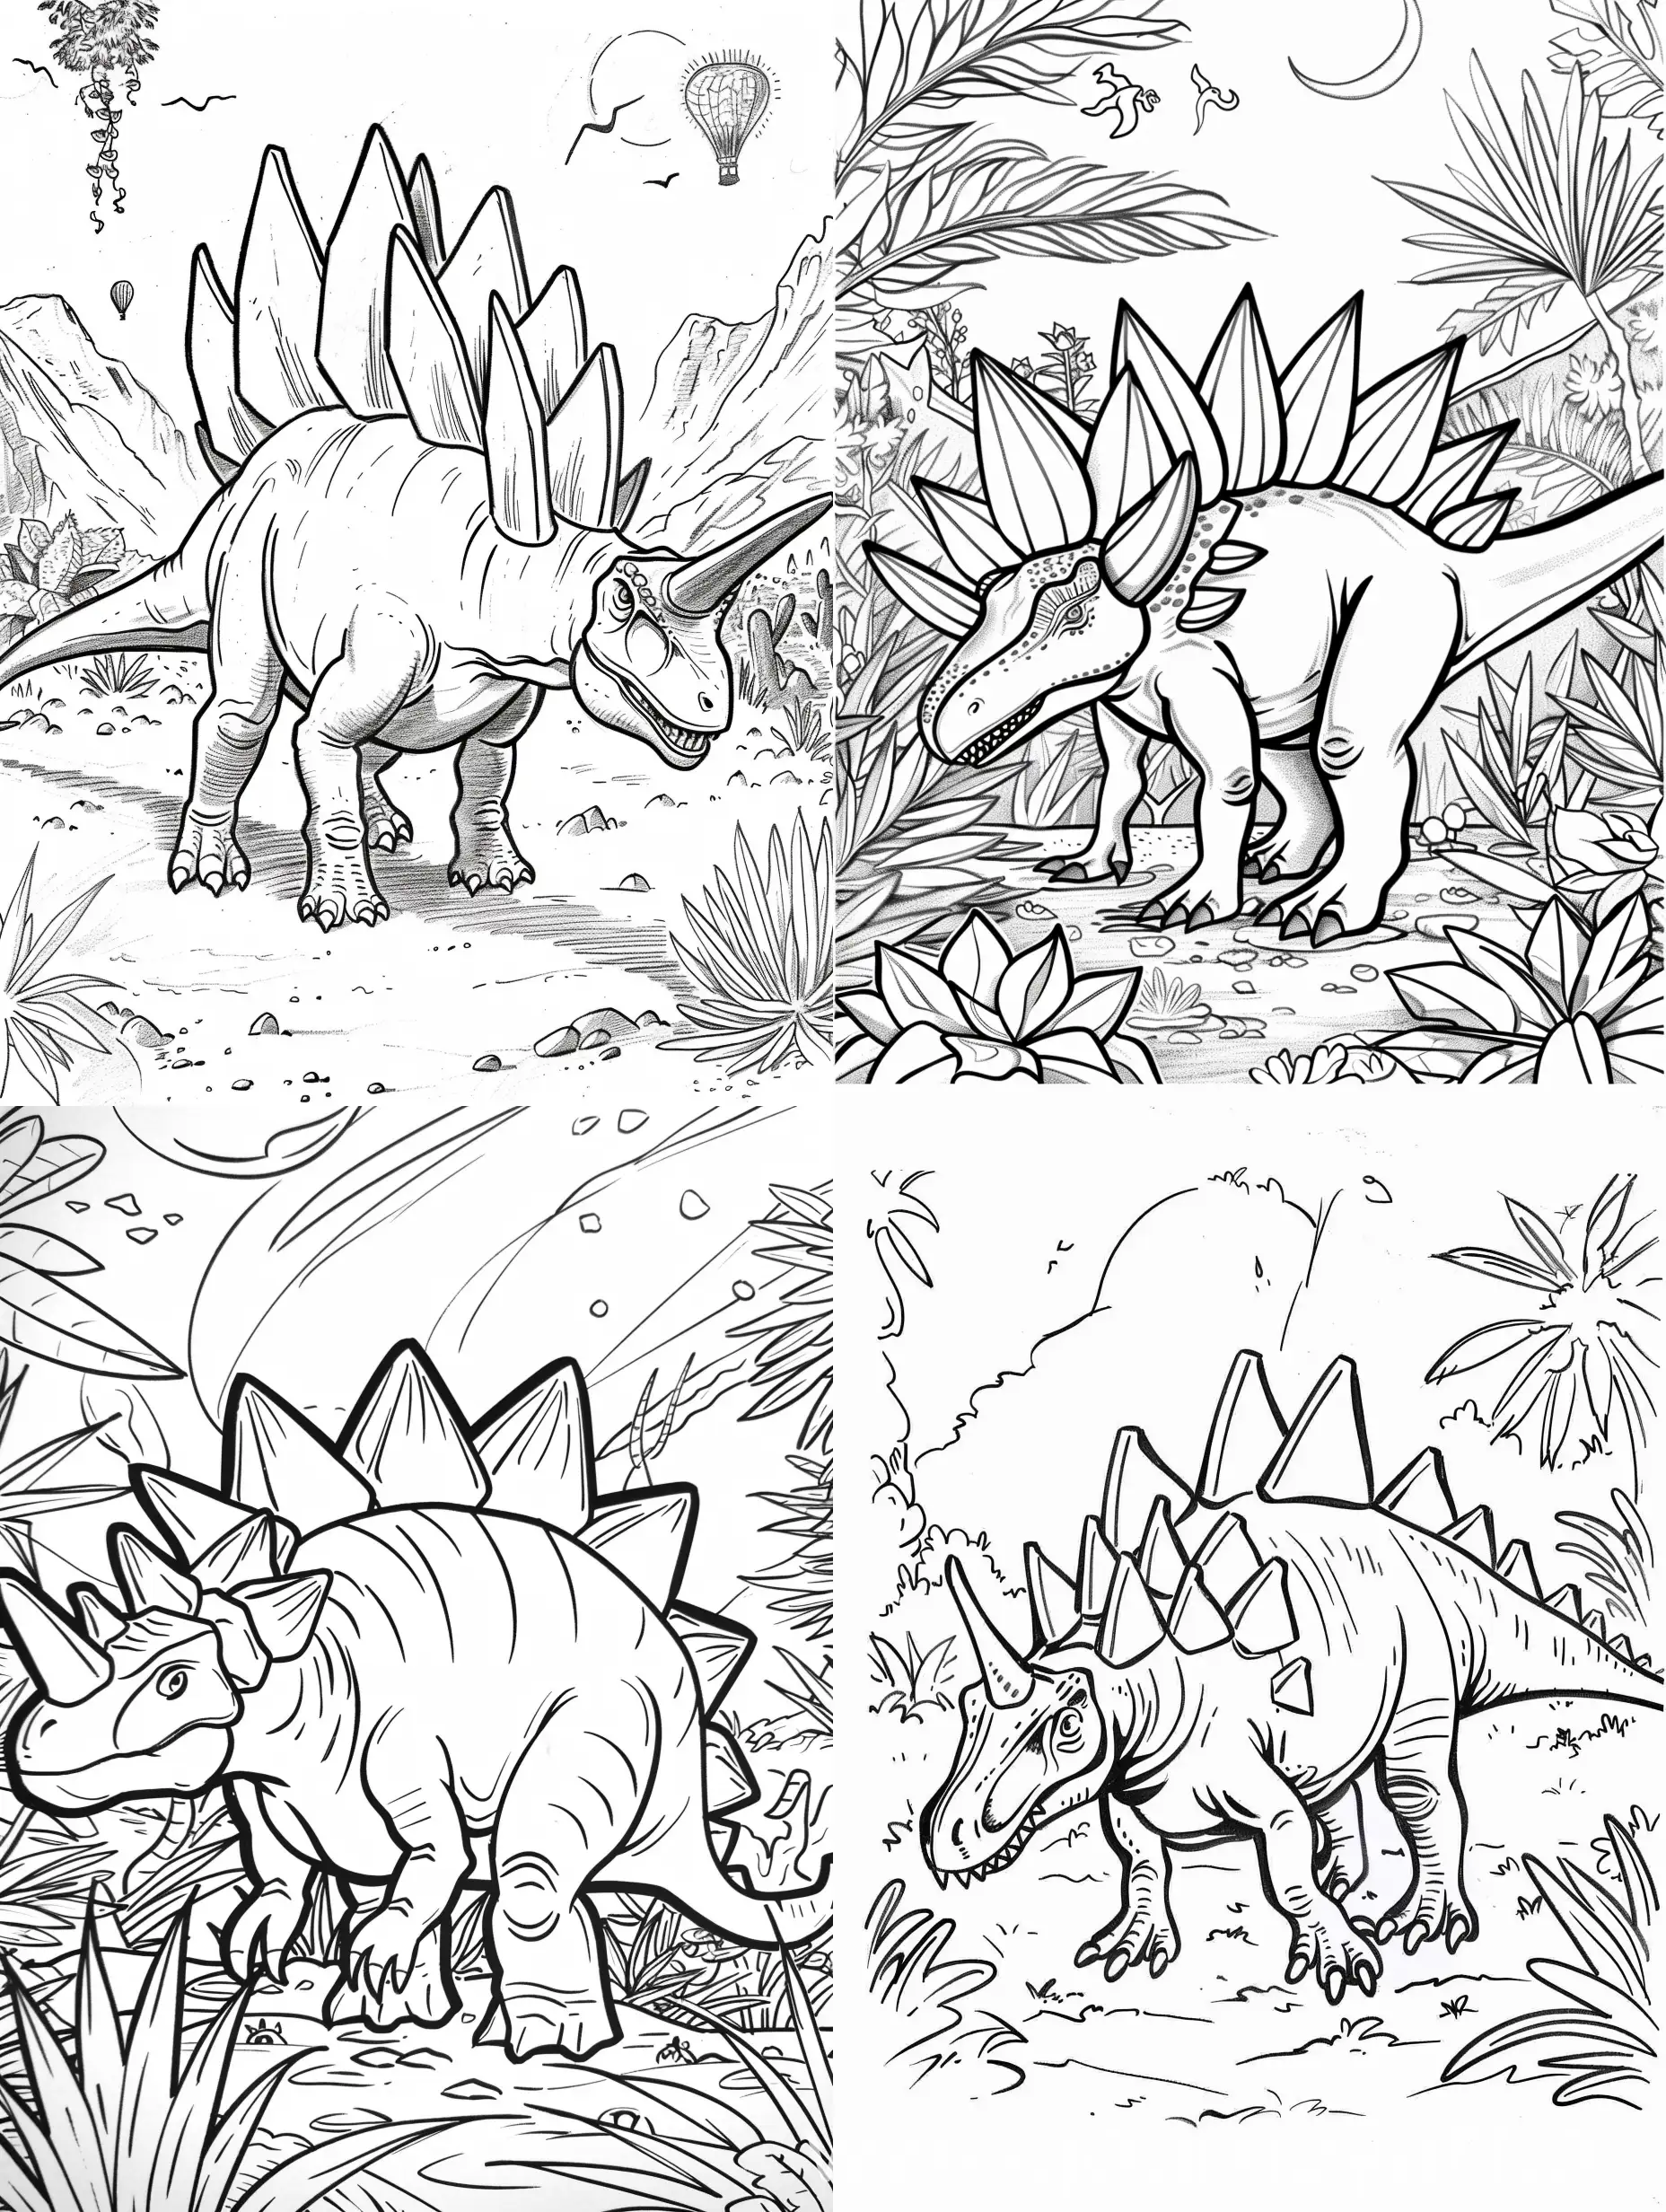 Stegosaurus-Coloring-Page-for-Children-Version-6